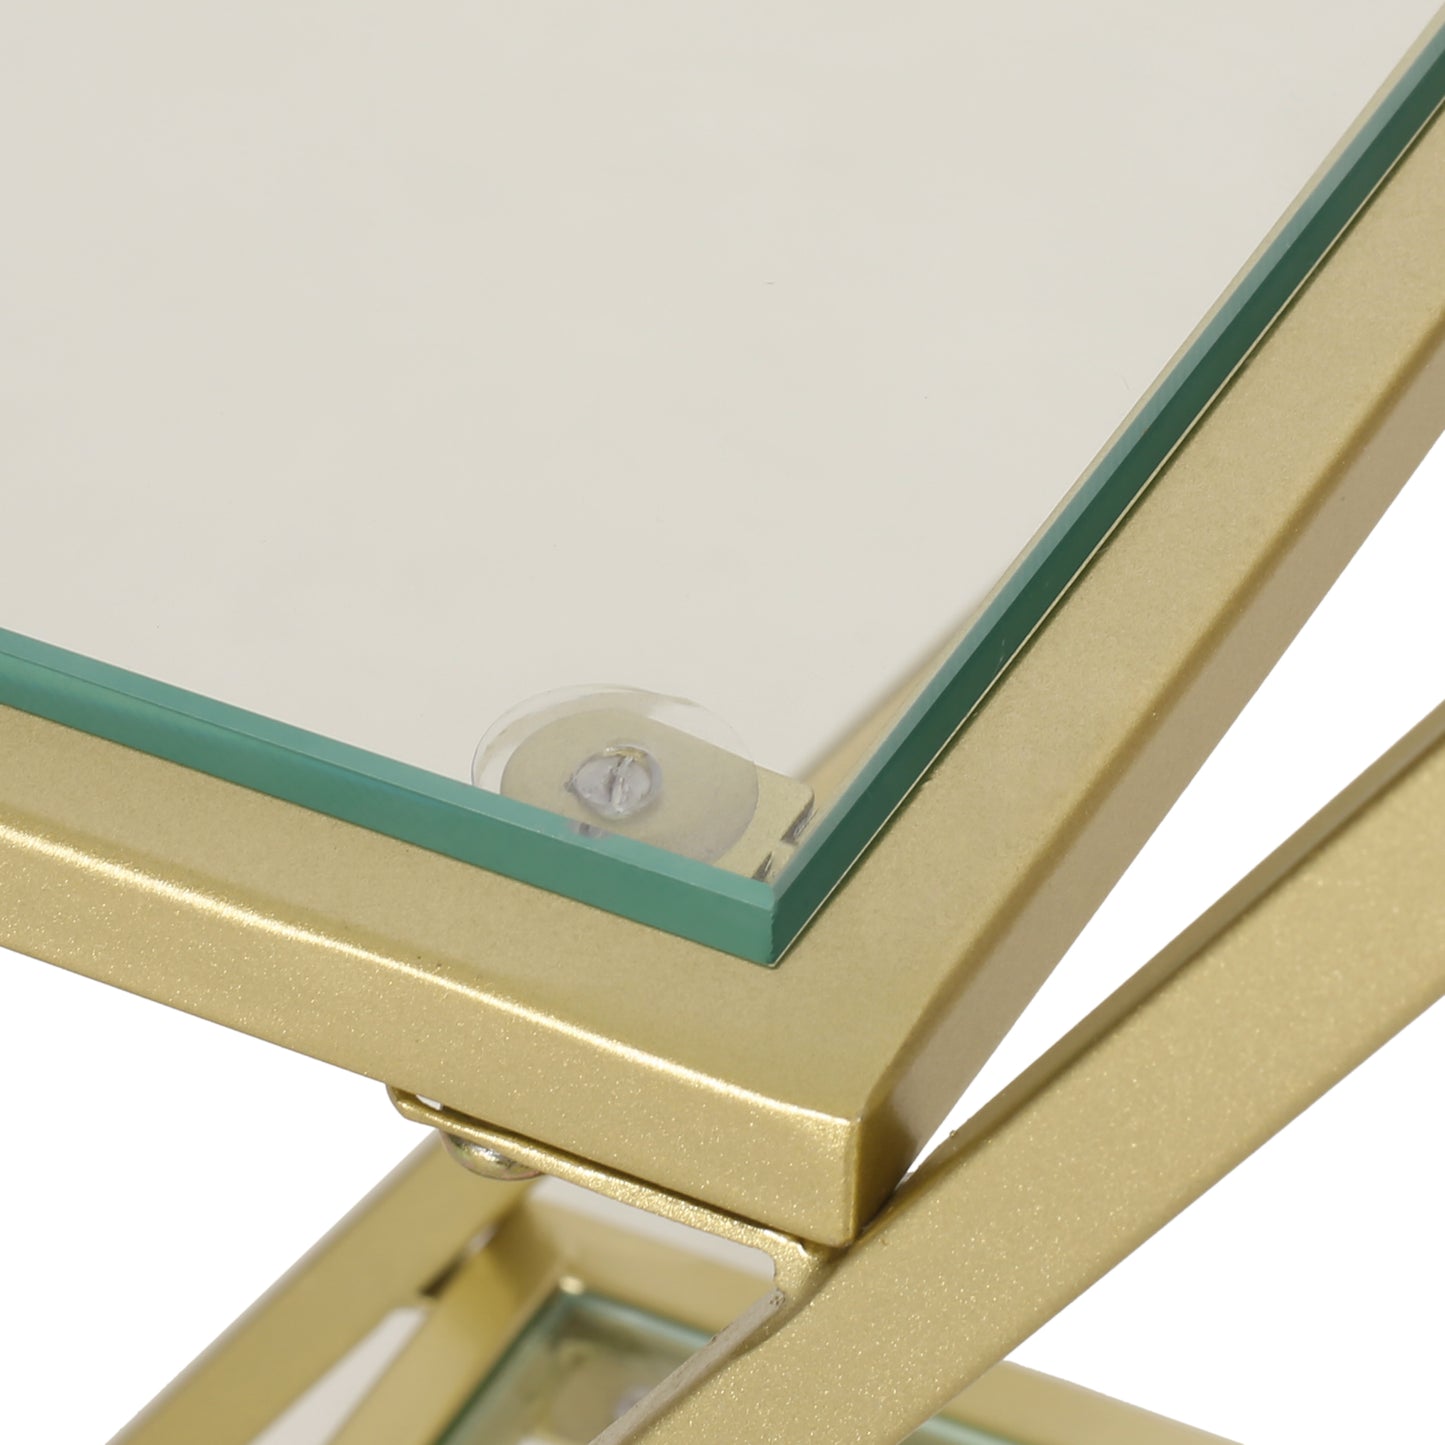 Wallner Modern Glam Tempered Glass 3 Shelf Asymmetrical Bookcase, Gold